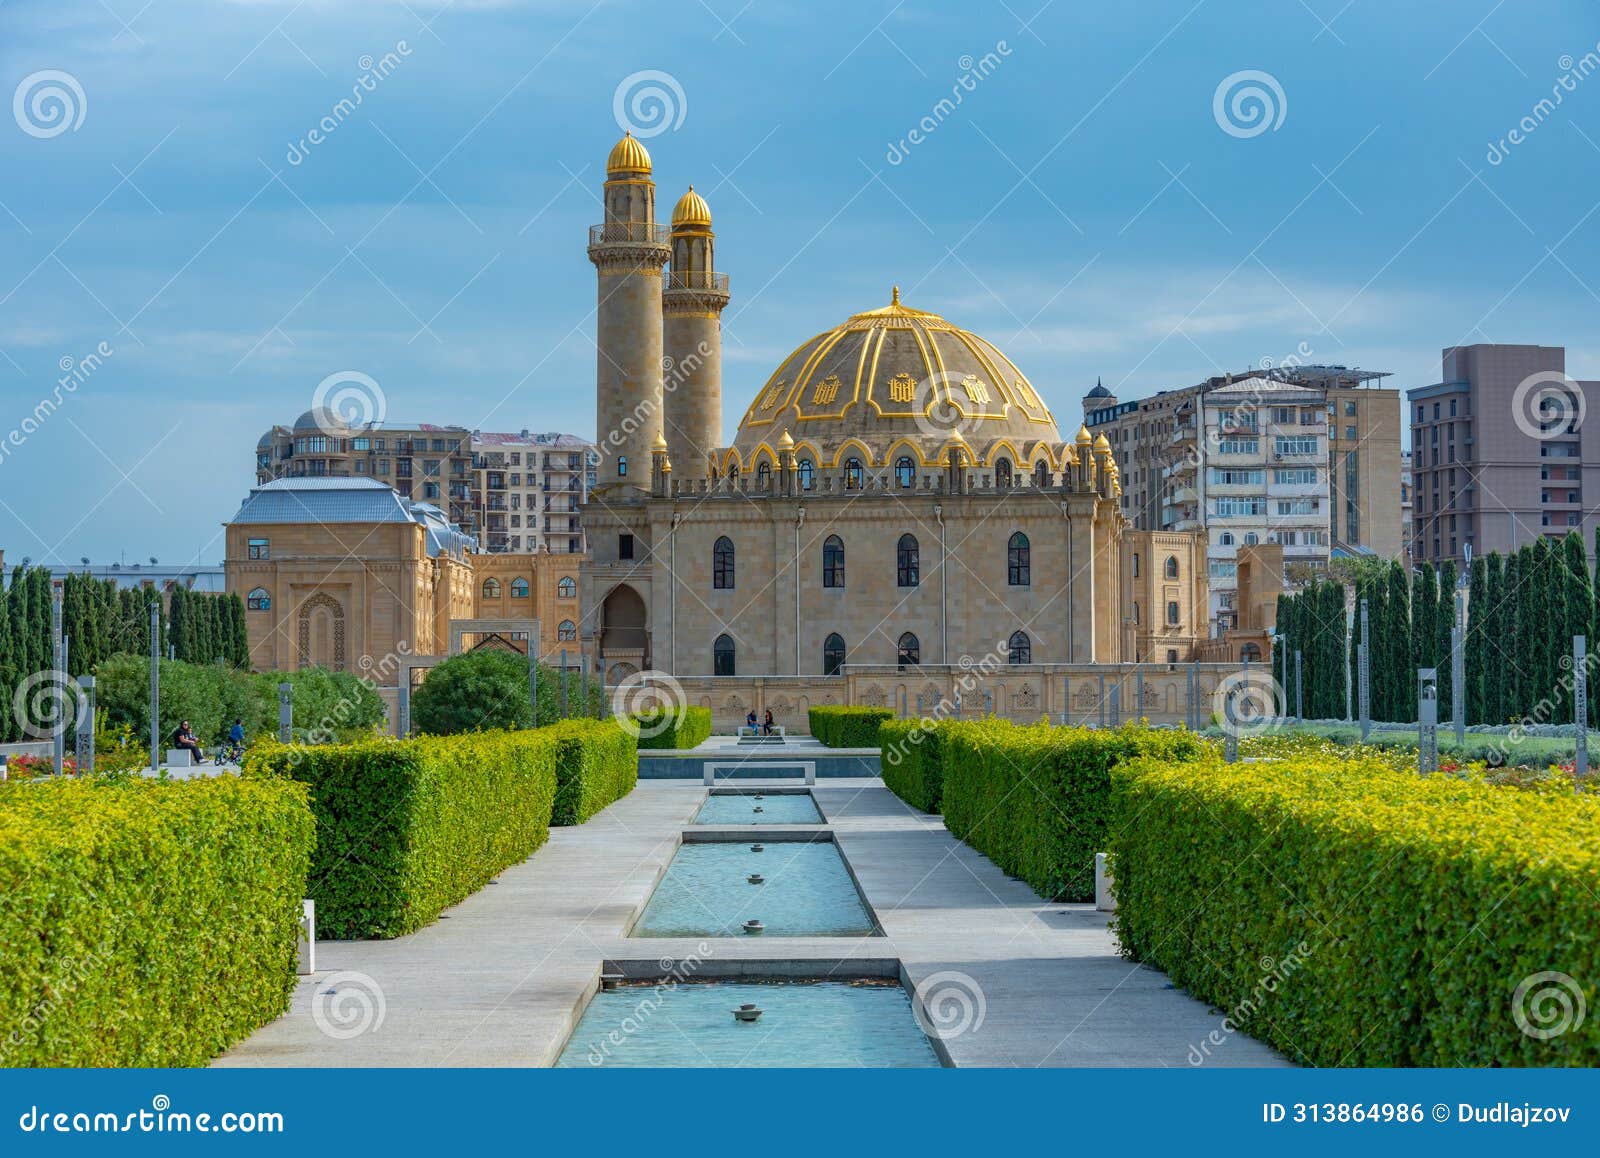 taza pir mosque in baku, azerbaijan